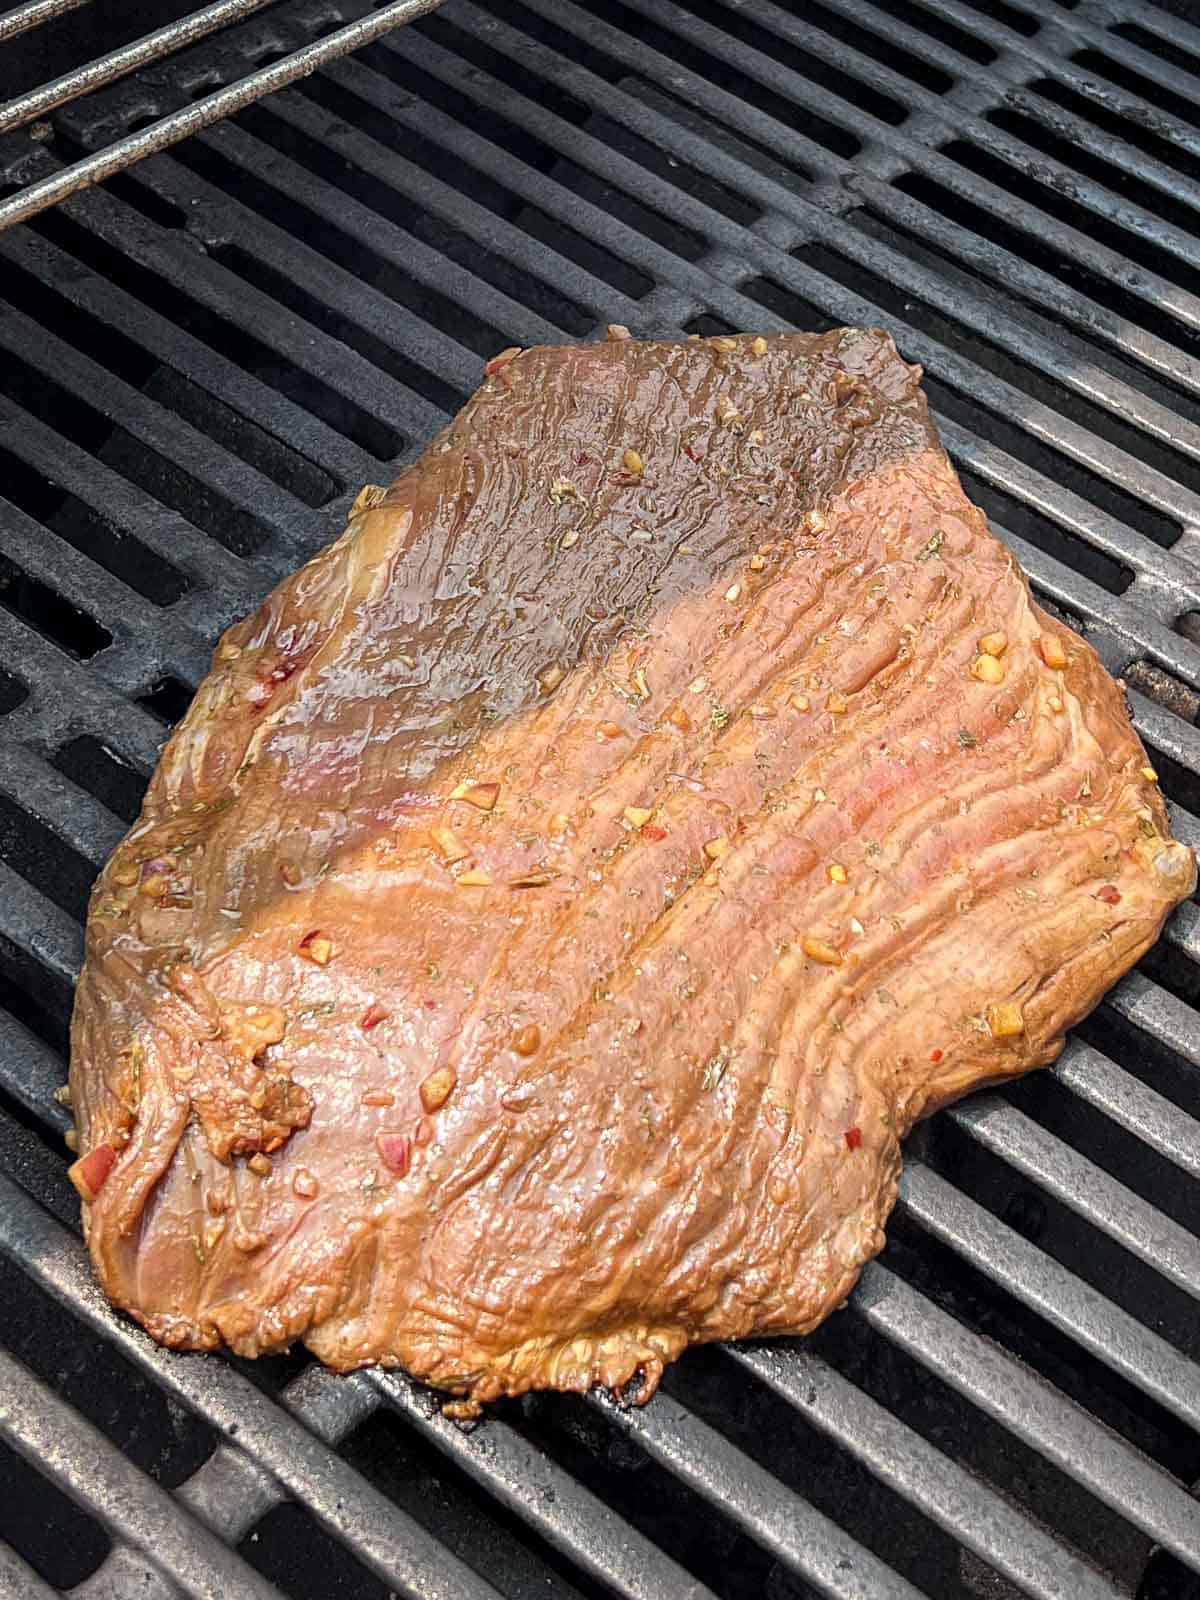 Marinated flank steak on grill grates.